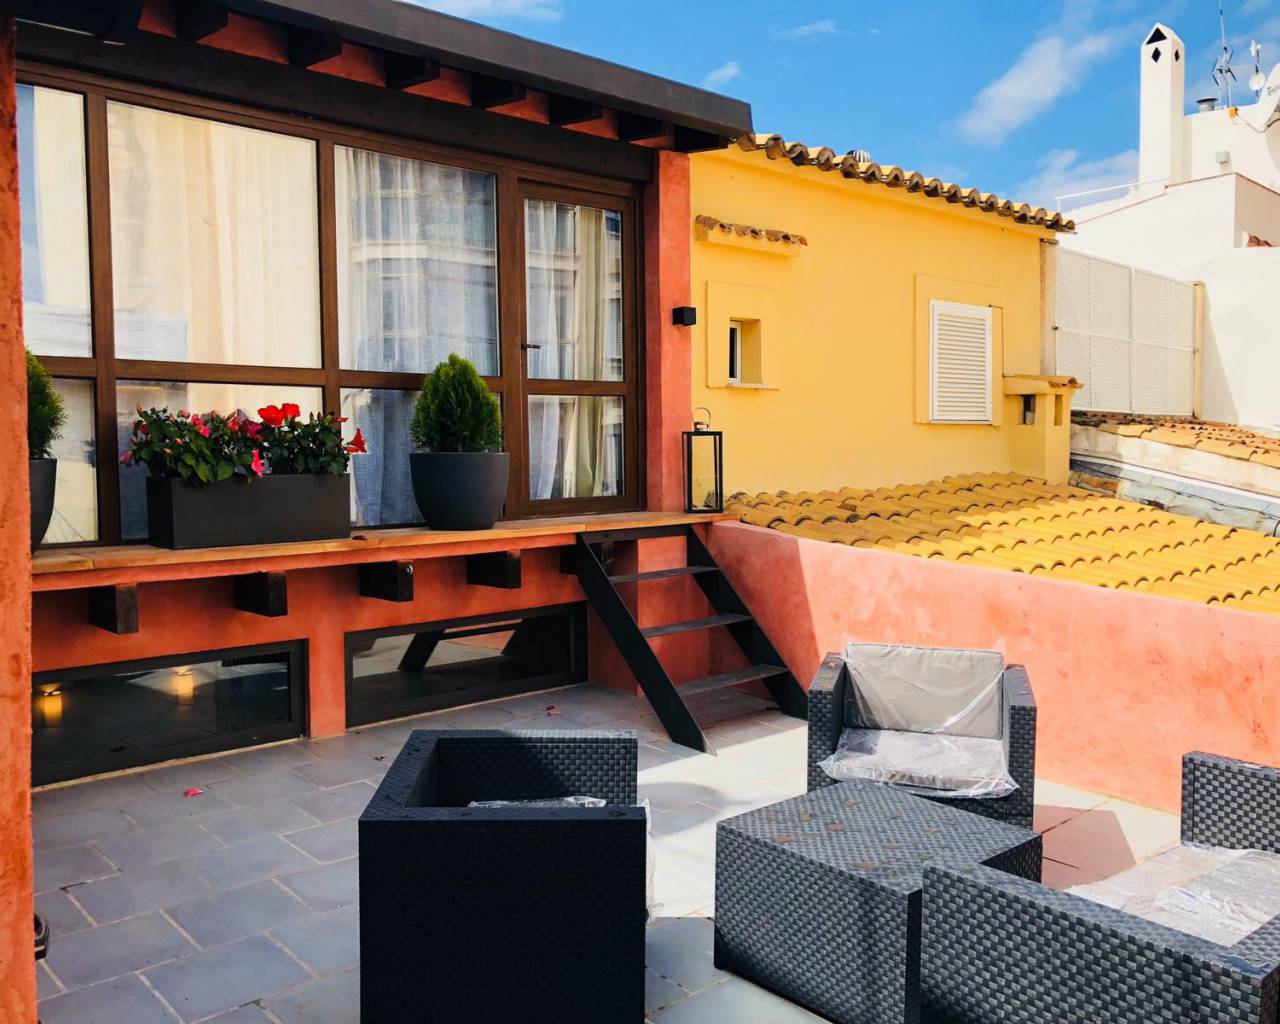 Property for rent in Santa Catalina-Mallorca rental properties